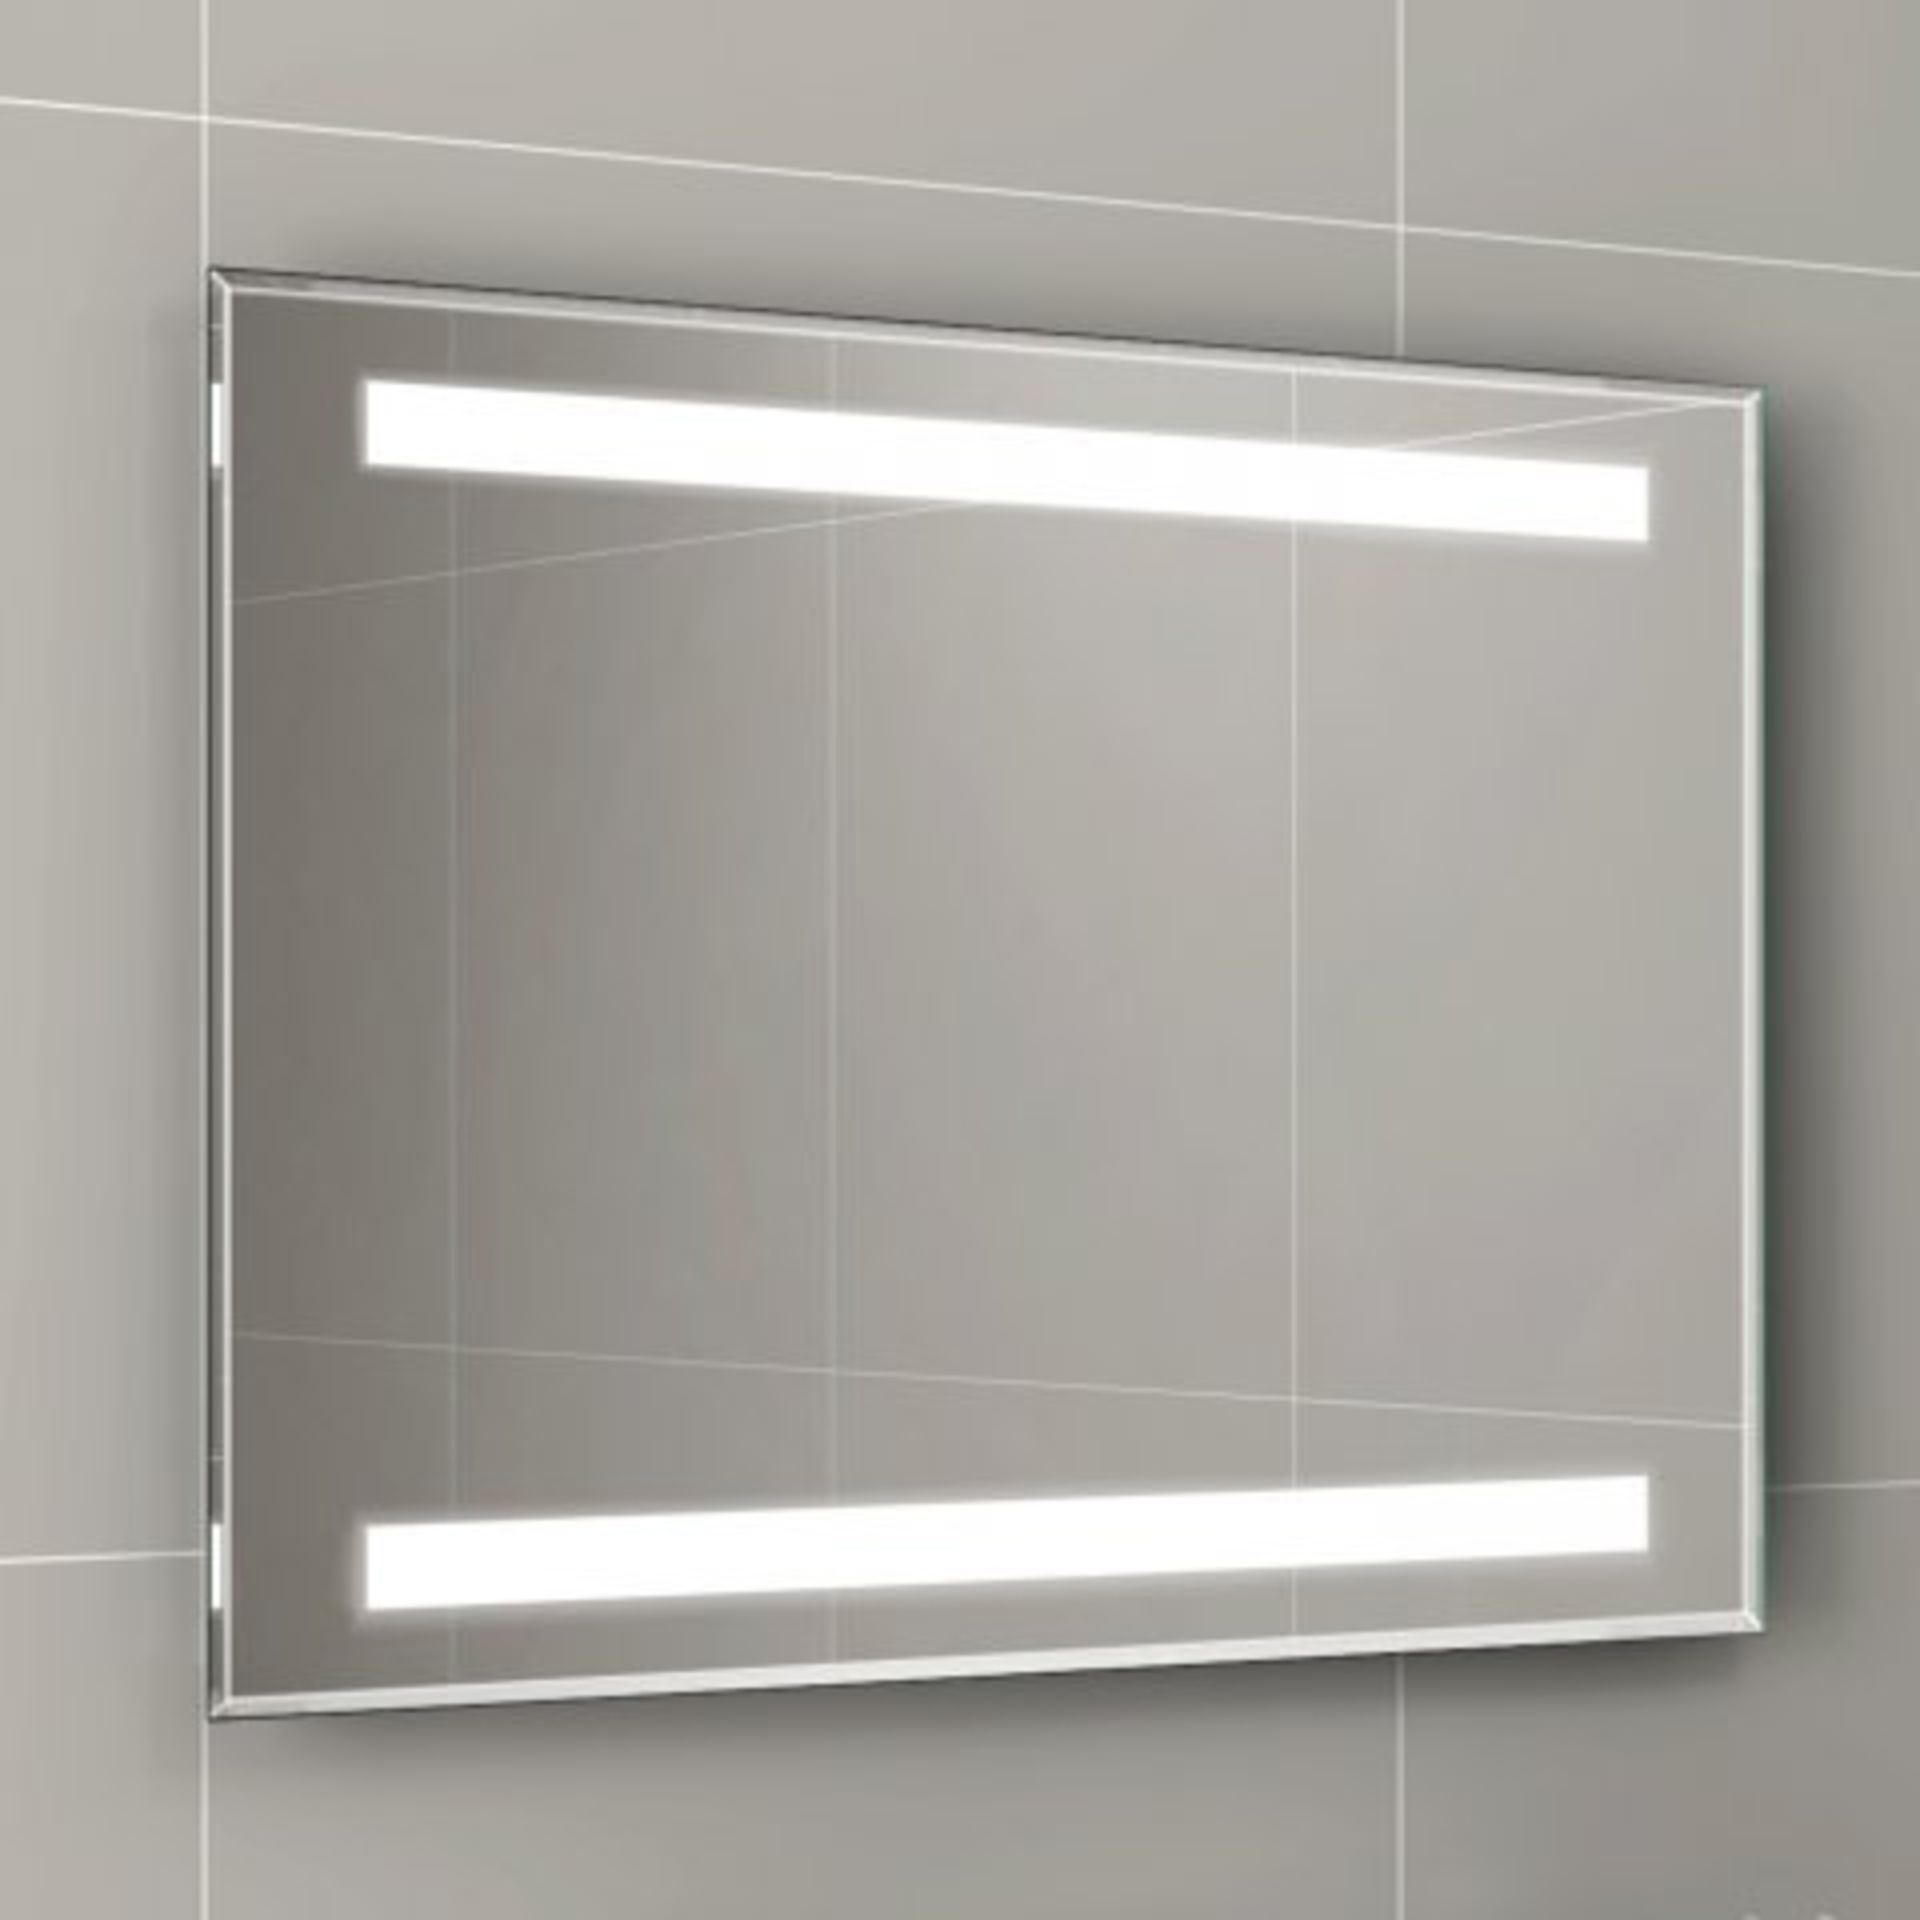 (H131) 600x800mm Omega Illuminated LED Mirror. RRP £349.99. LED Power The LED gives instant - Image 2 of 3